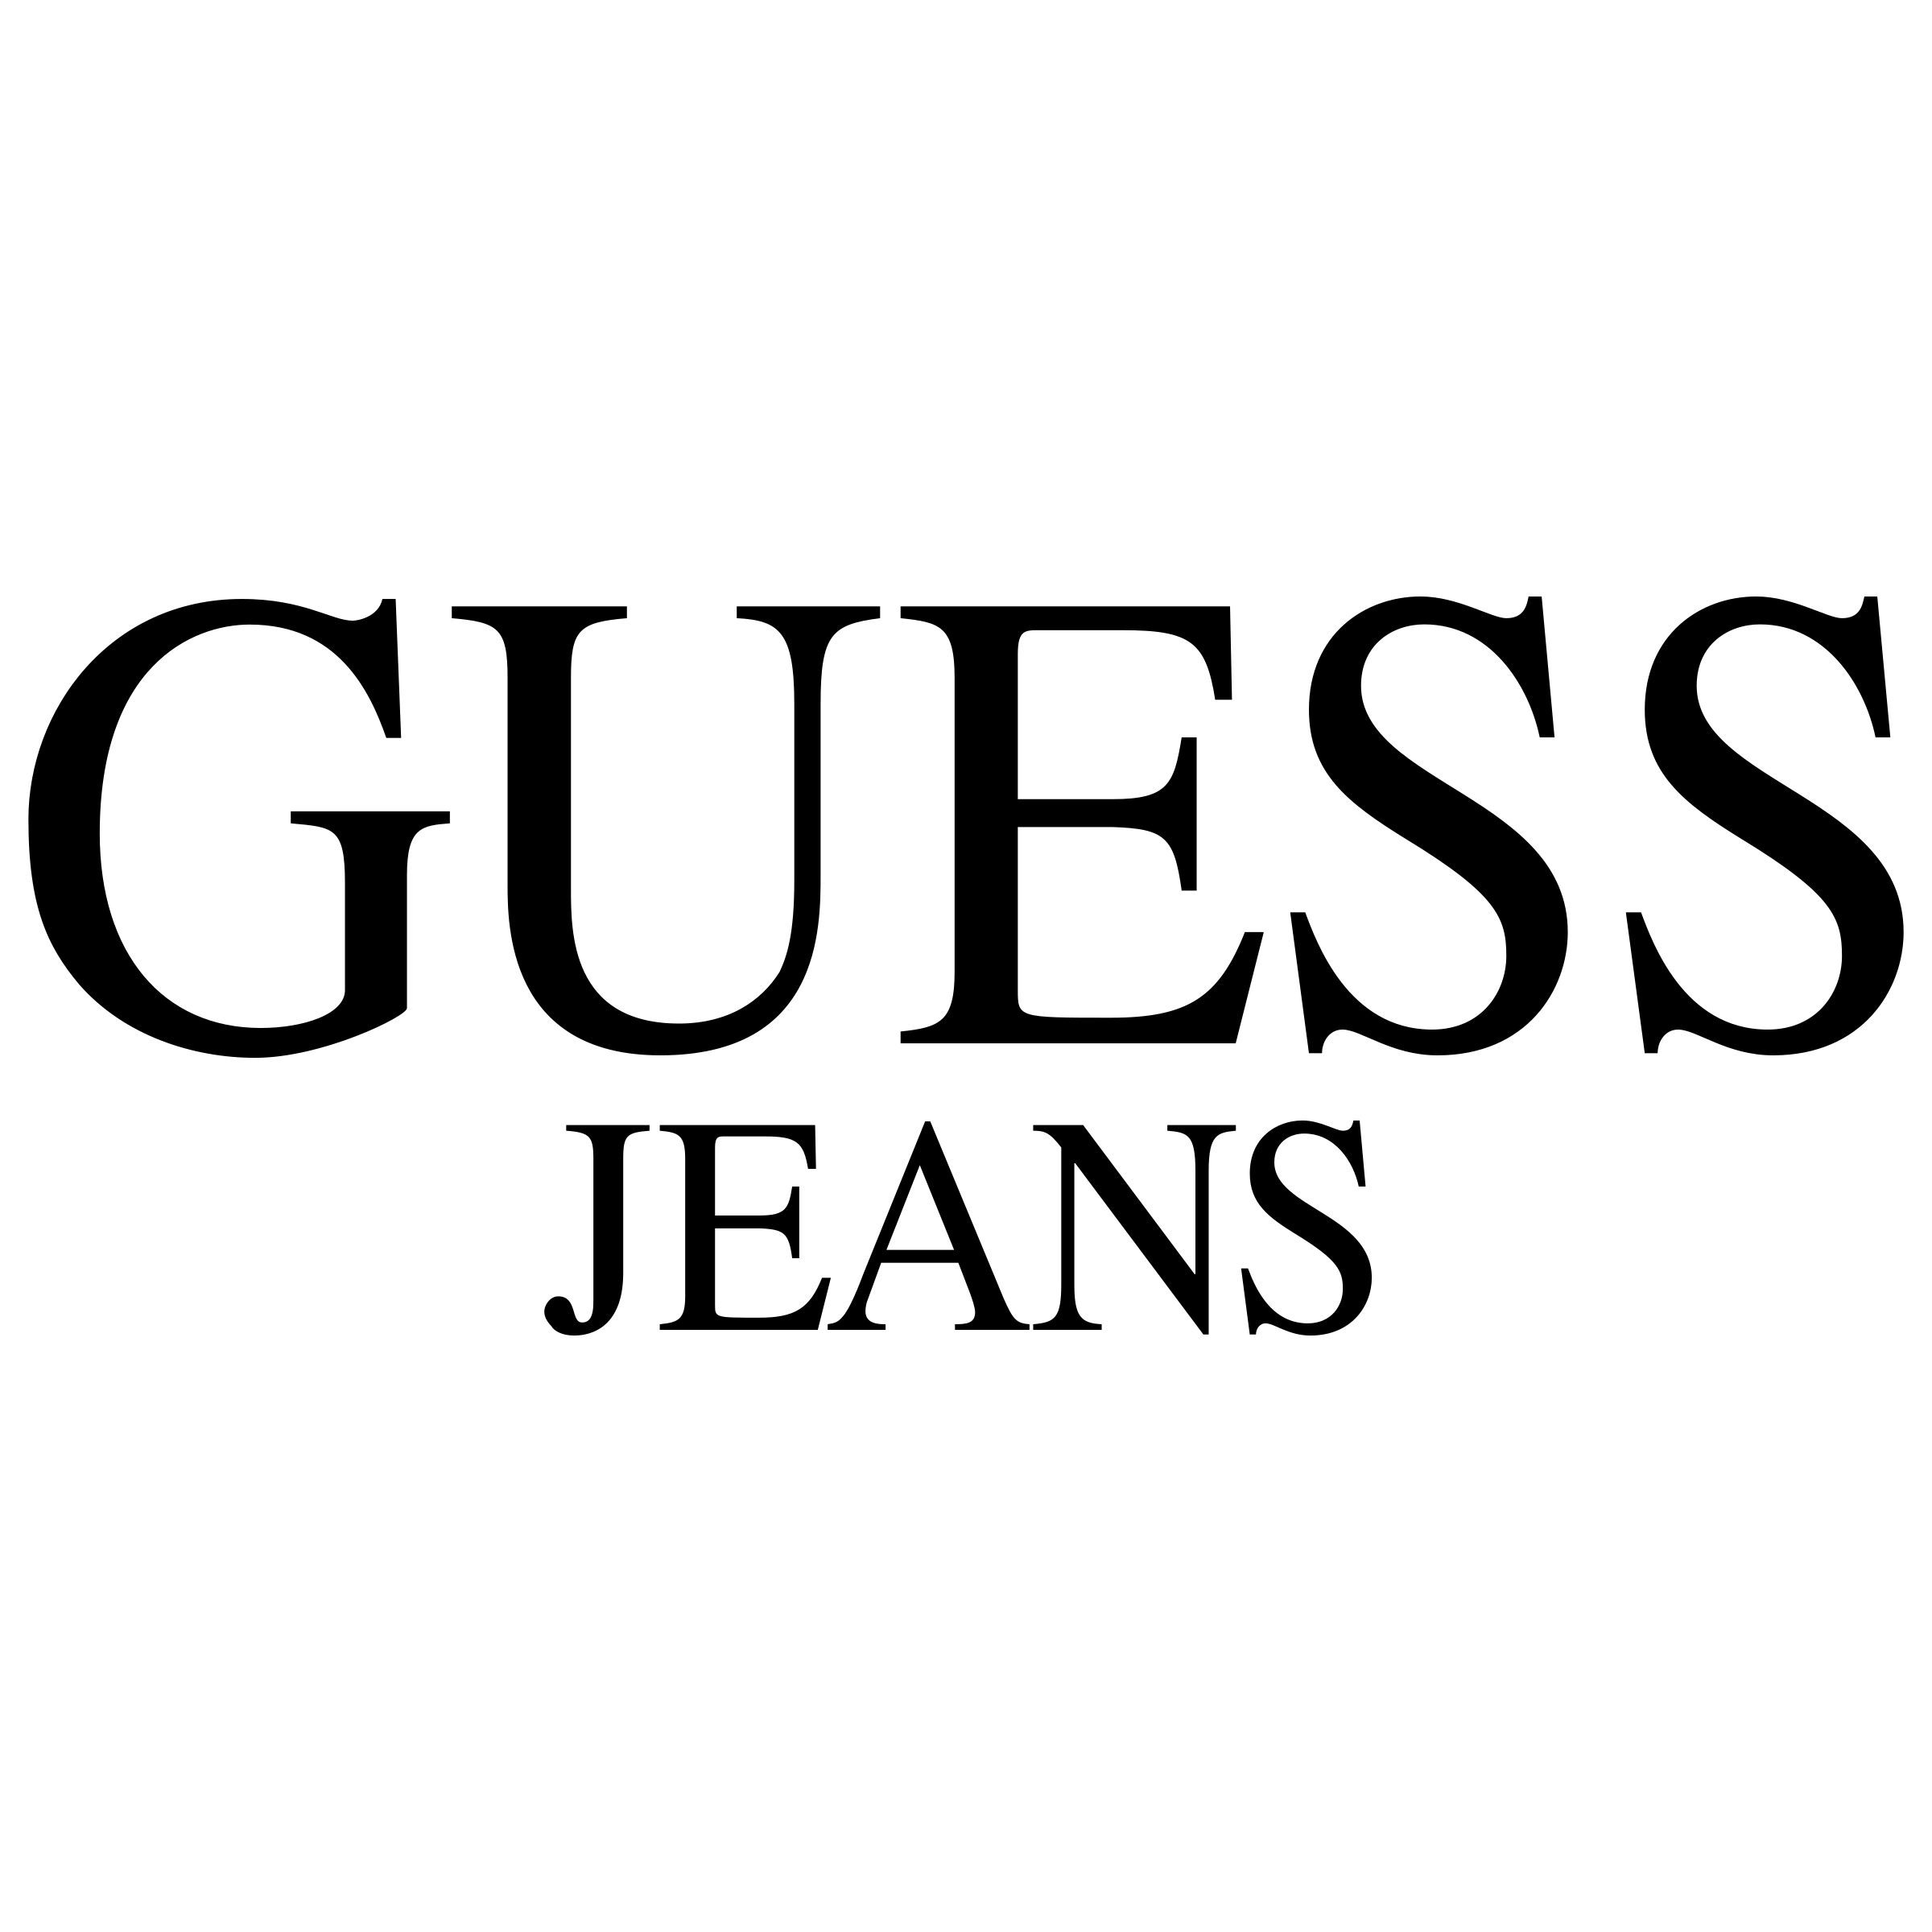 Jeans Logo - Guess Jeans Logo PNG Transparent & SVG Vector